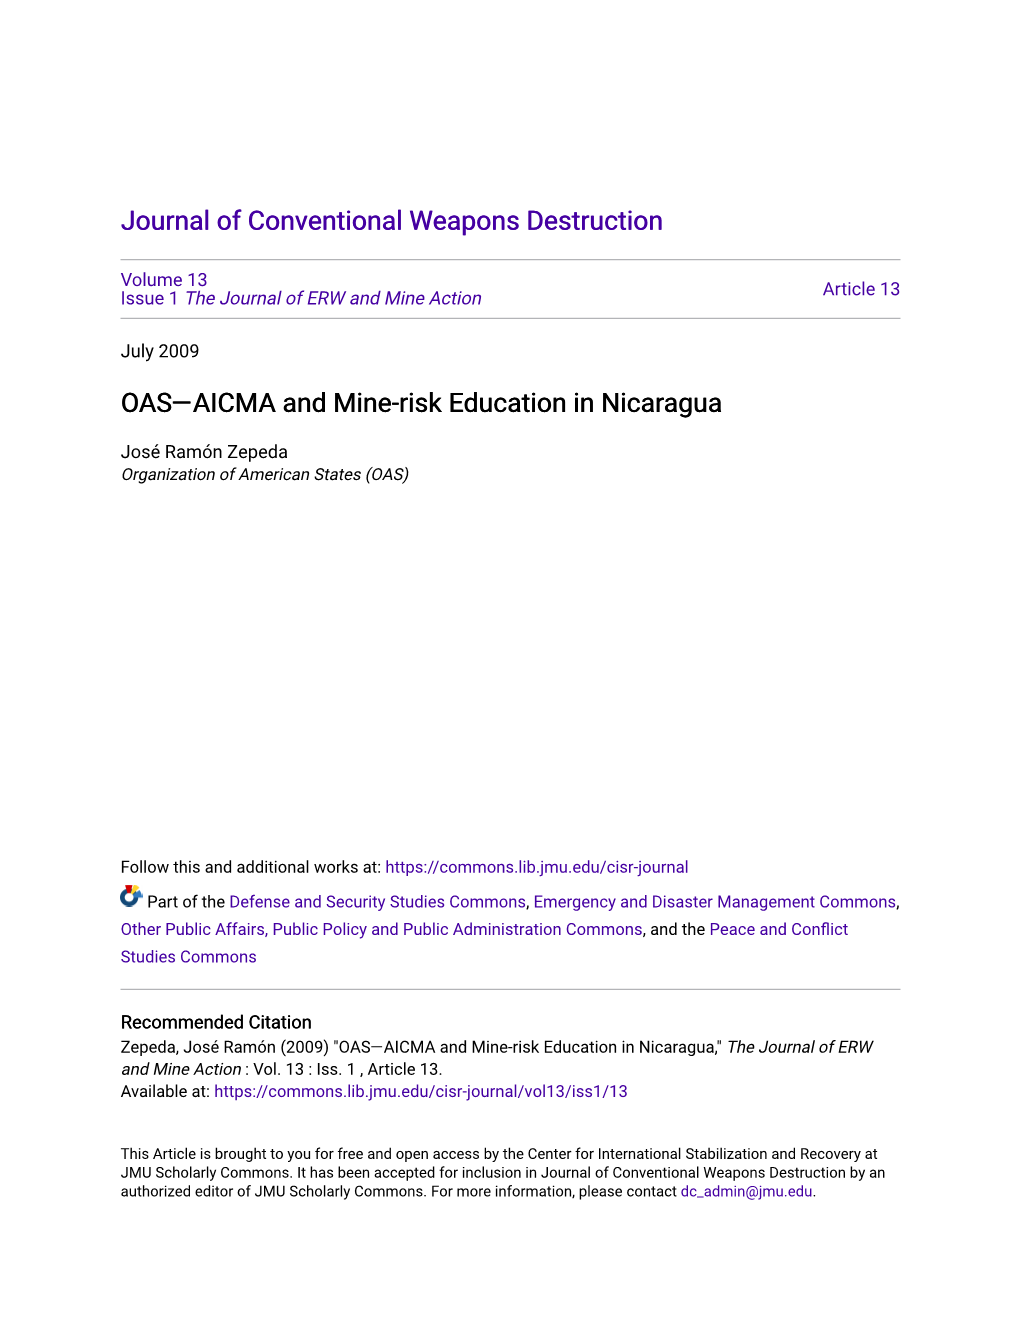 OAS—AICMA and Mine-Risk Education in Nicaragua